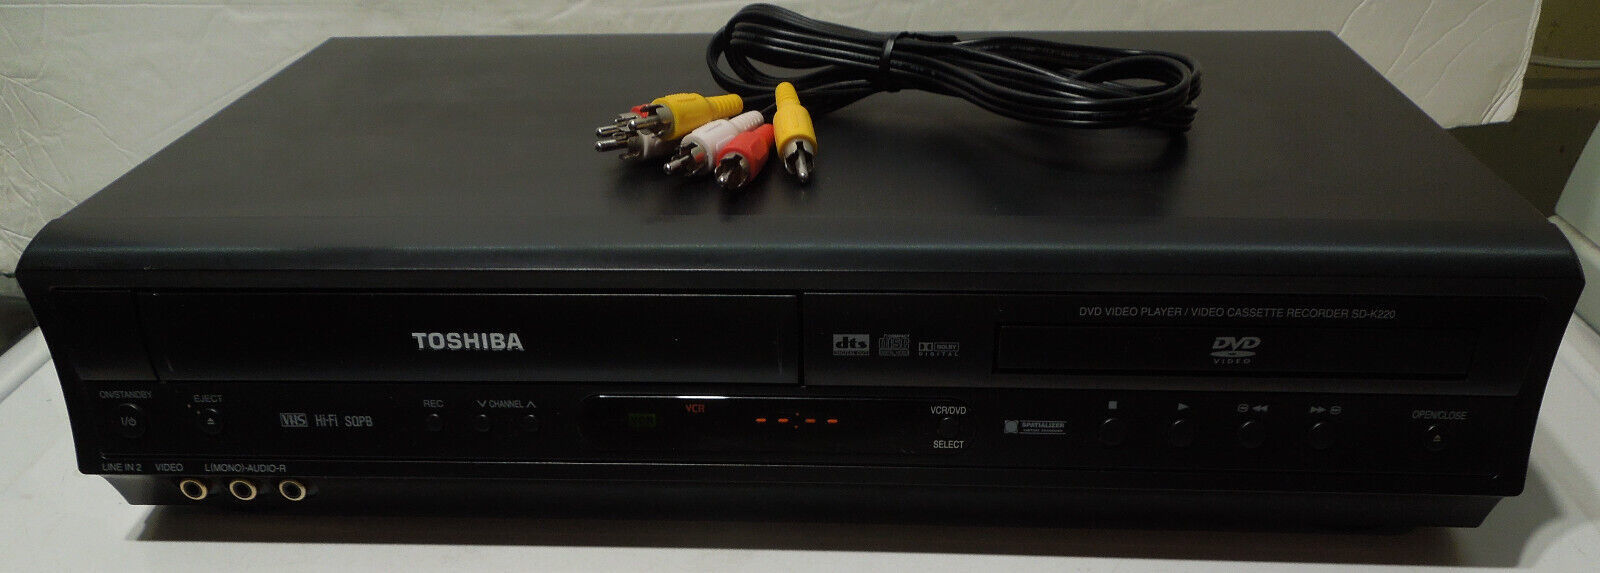 Toshiba VCR DVD Combo Player SD-K220U 4 Head Hi-Fi VHS w/AV Cable Tested Working - $39.95